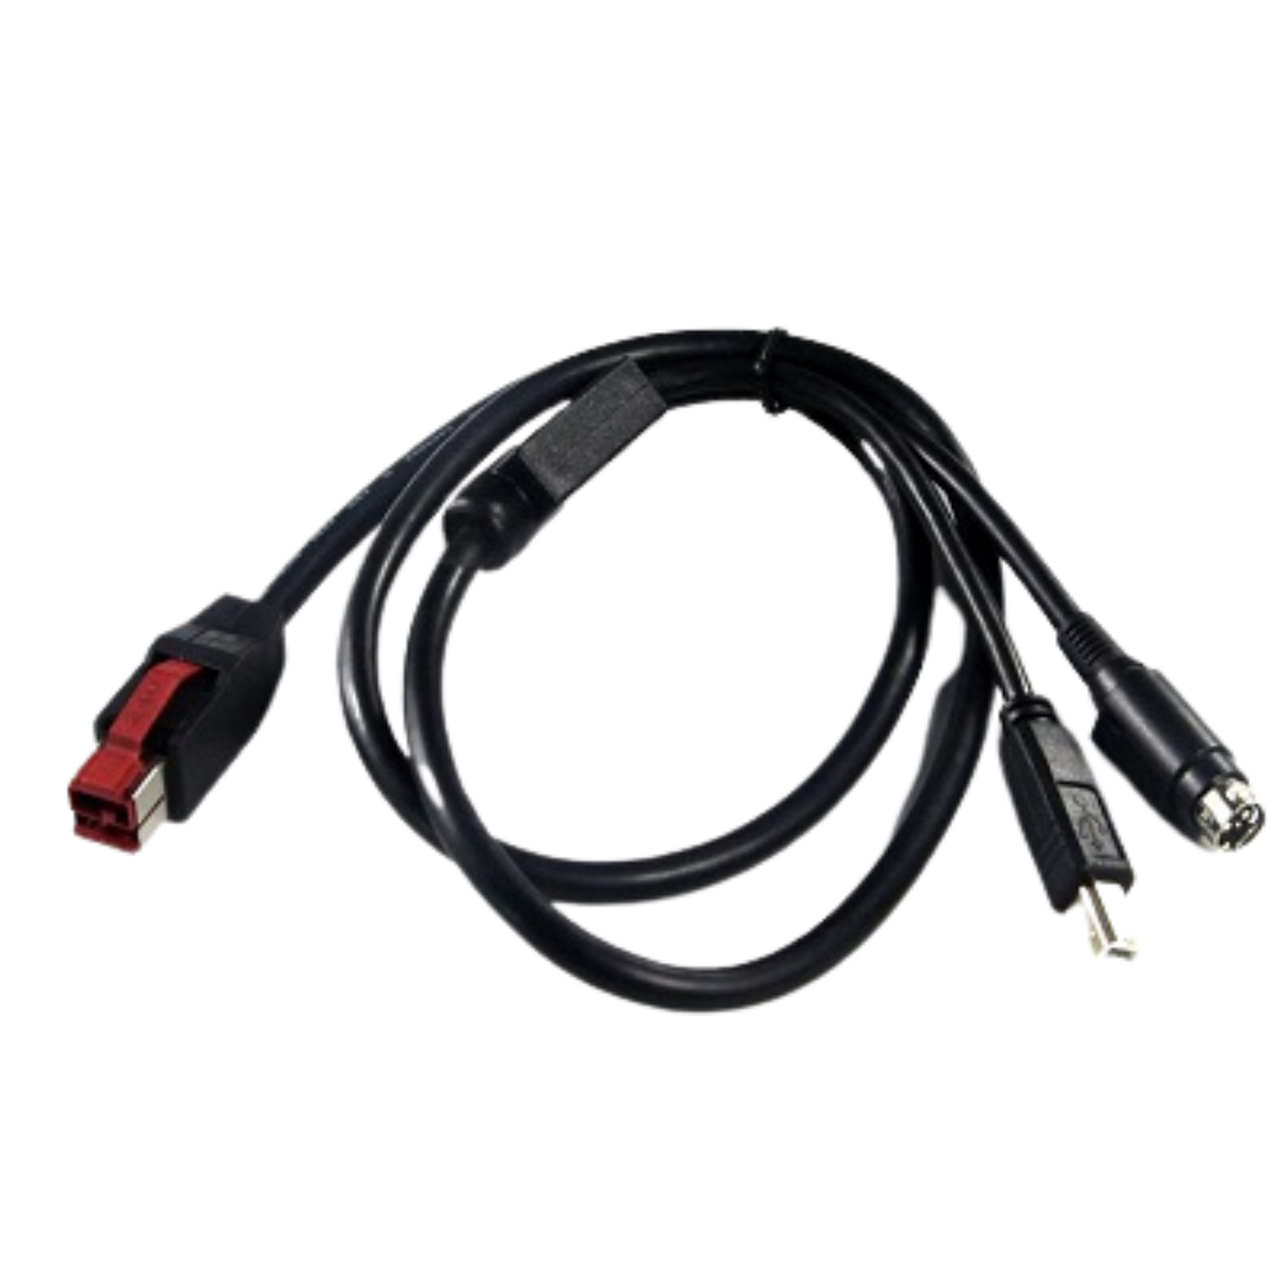 Buy PRINTER CABLE 24V POWERED TO HOSIDEN & USB B 1.8M BLACK Online in Australia | Posplaza